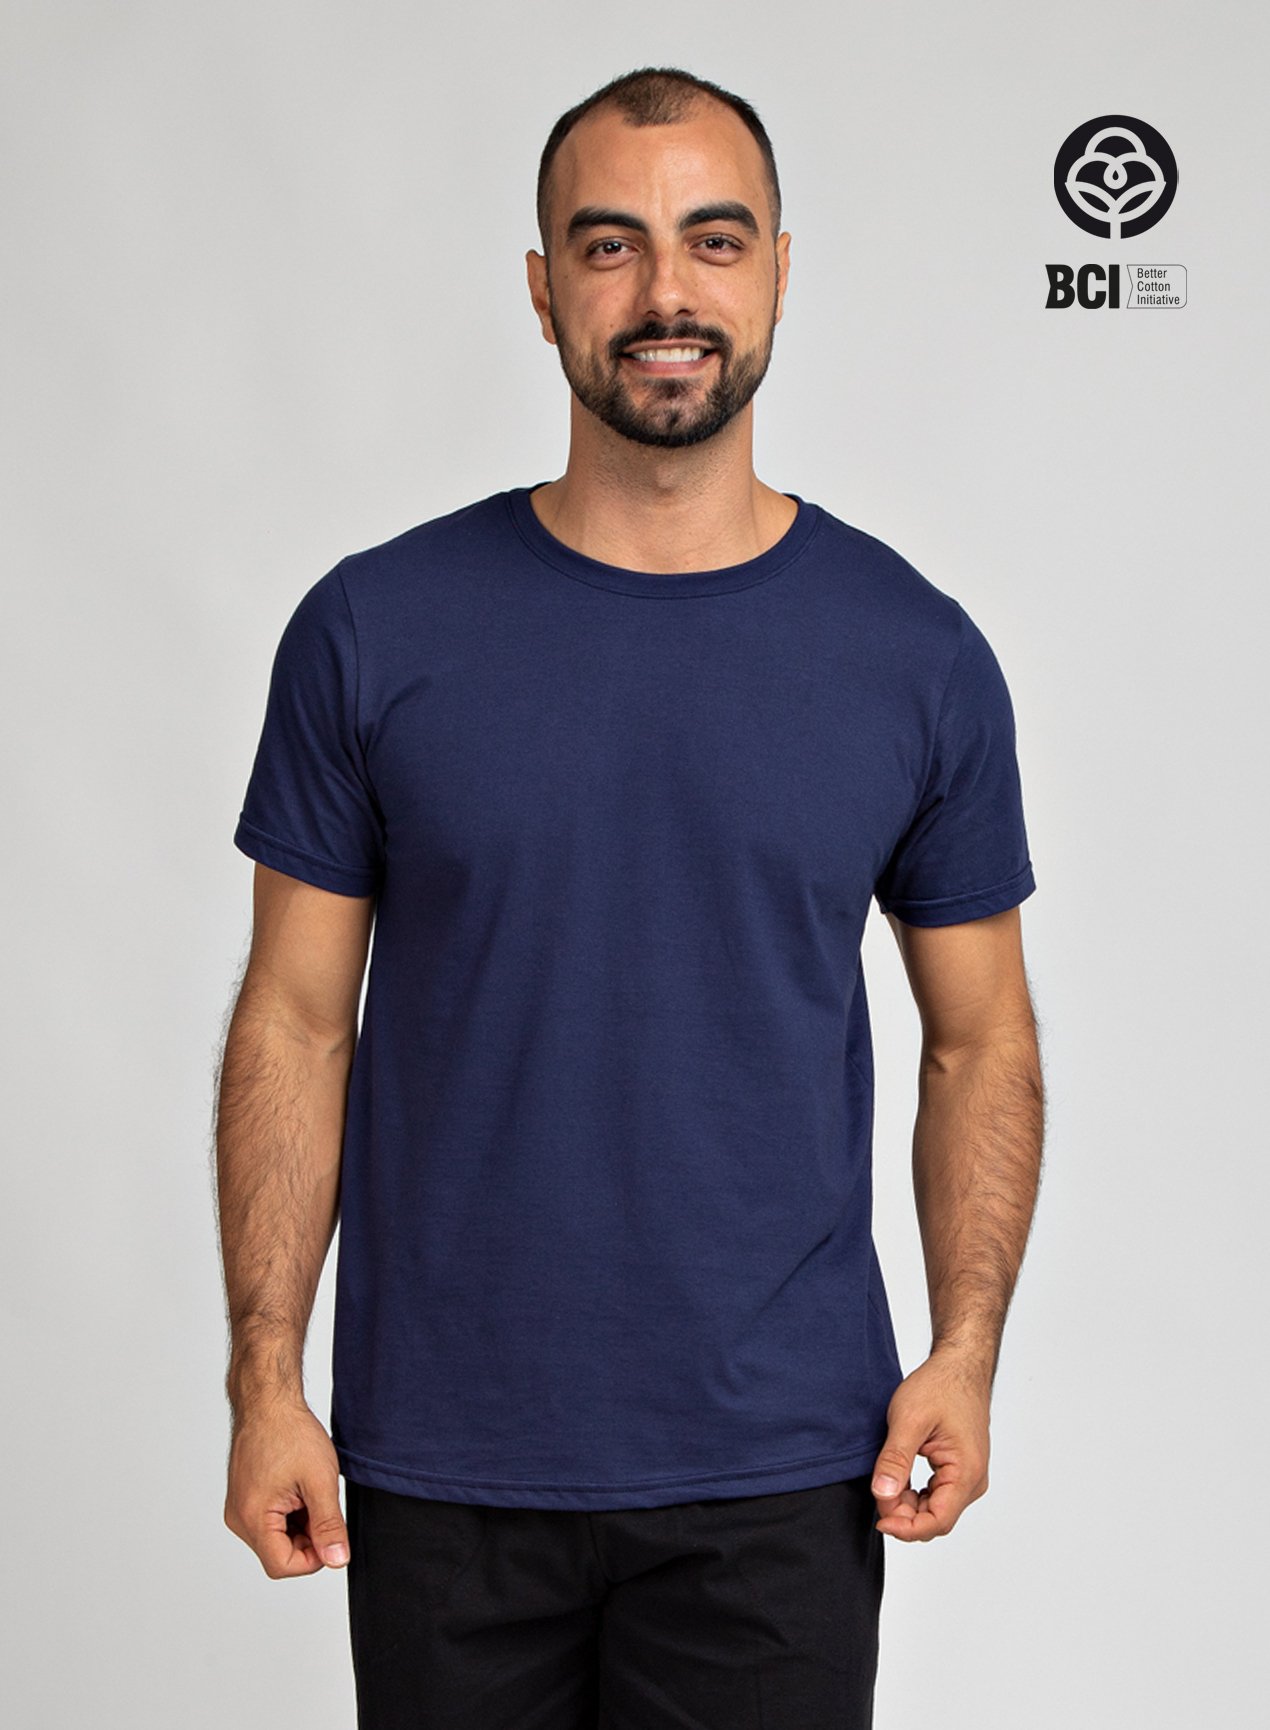 camiseta masculina algodao bci premium universo basico azul marinho